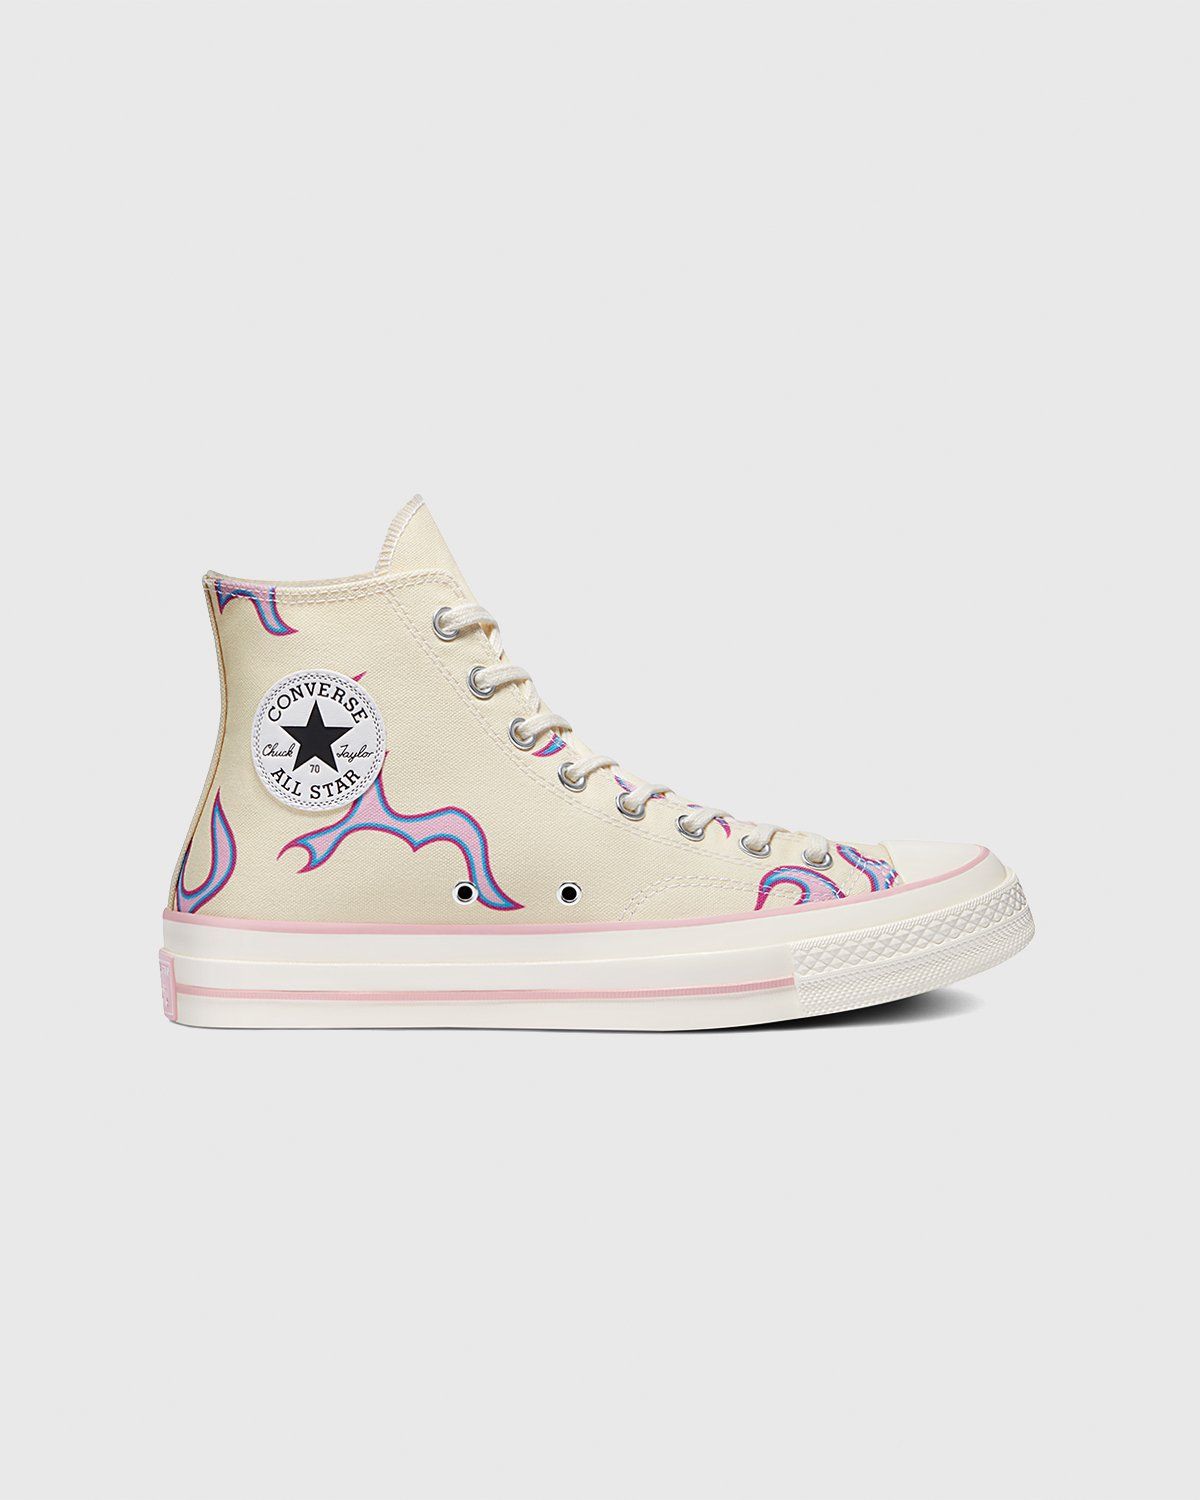 Converse x GOLF WANG – Chuck 70 Flames Pastel Yellow - Sneakers - Yellow - Image 1